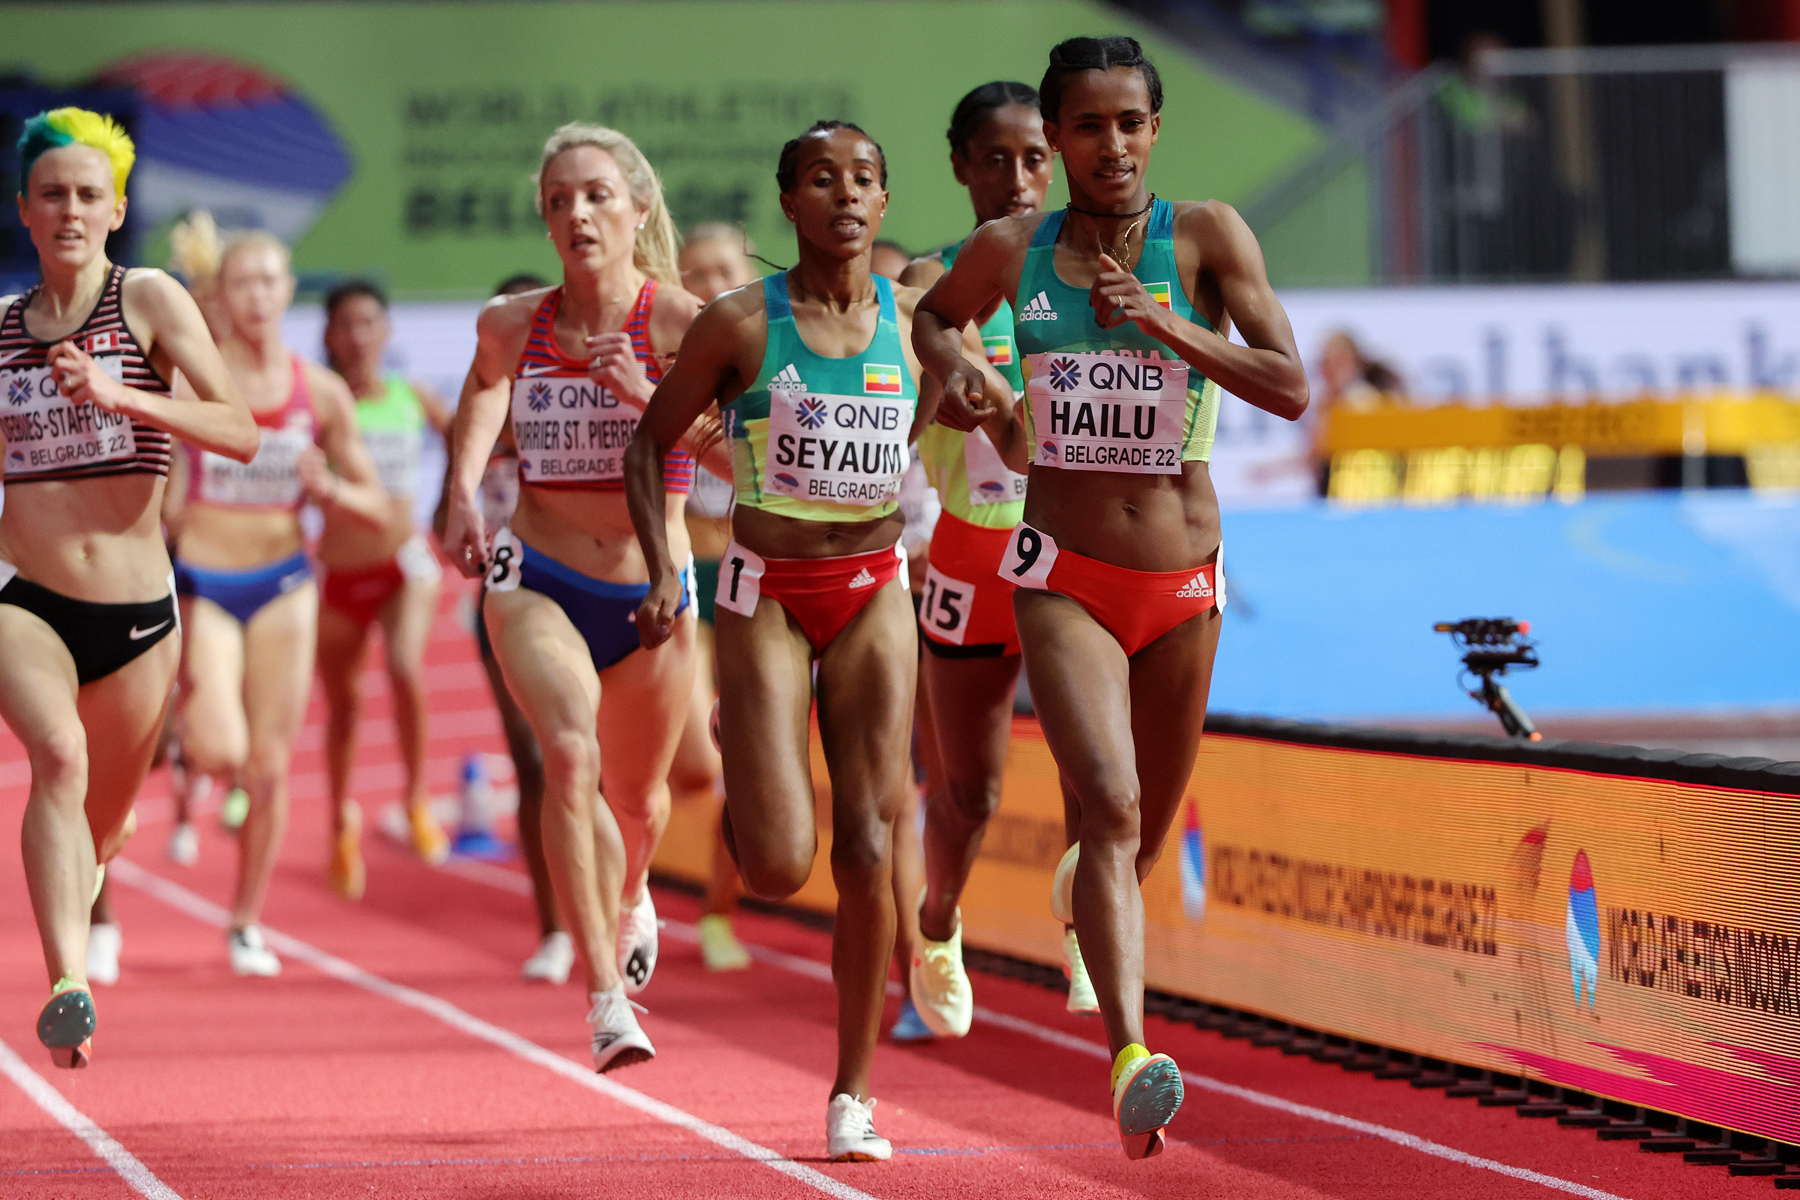 Ethiopian Lemlem Hailu leads the race in Belgrade 22 / Credit: Getty Images for World Athletics